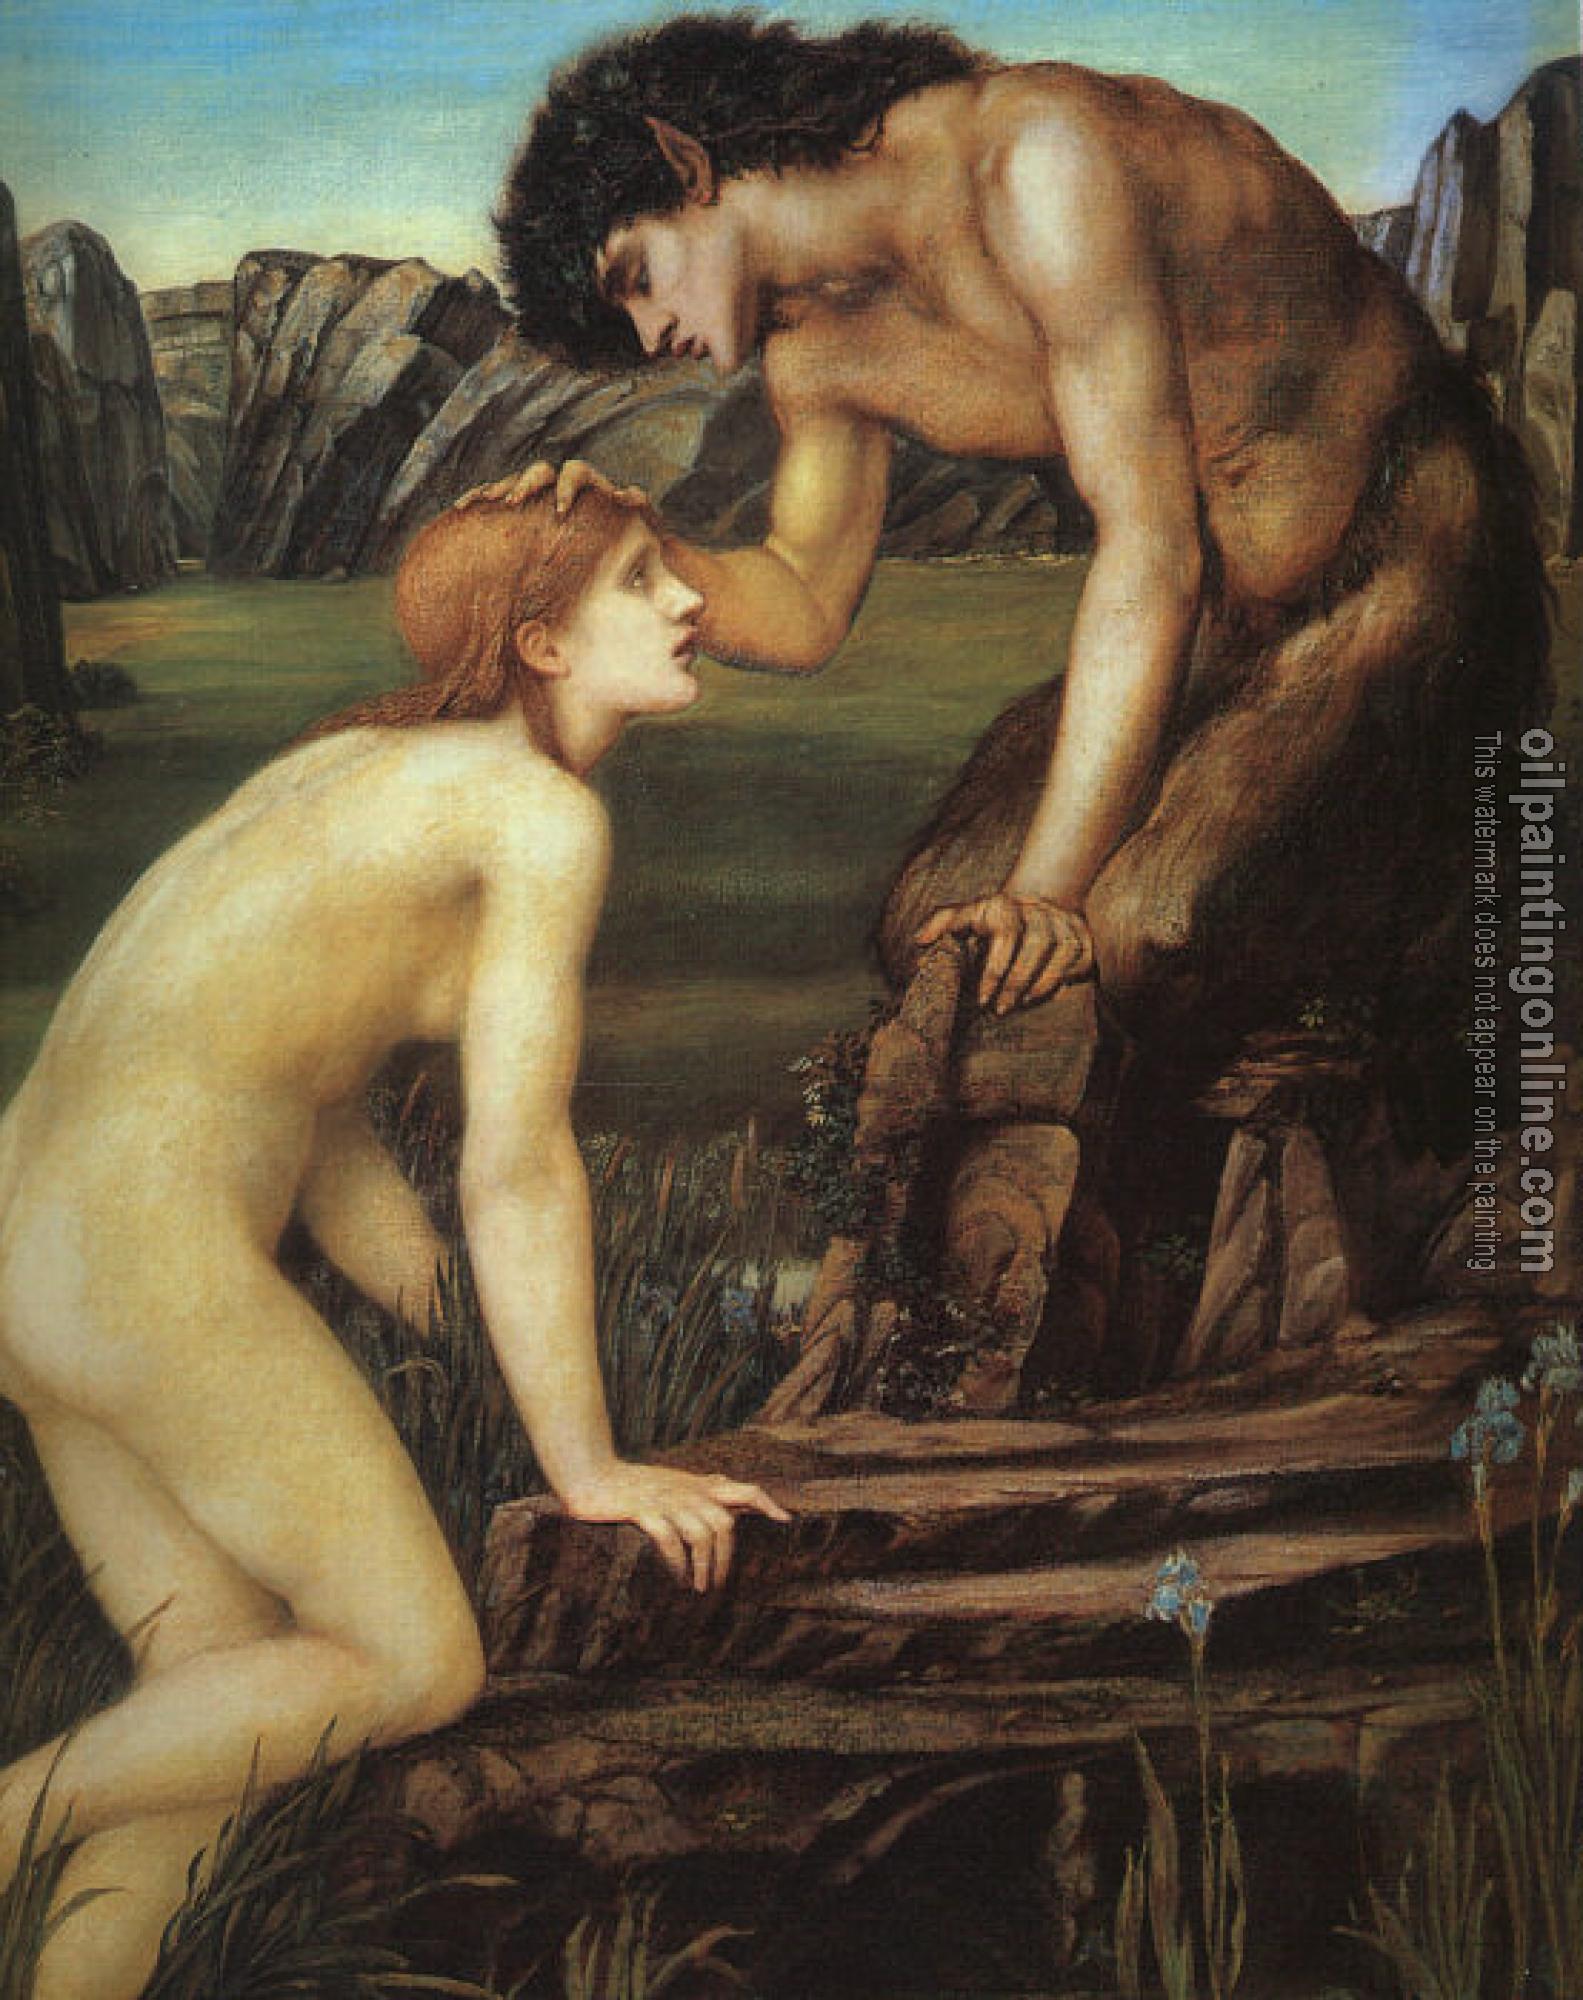 Burne-Jones, Sir Edward Coley - Pan and Psyche